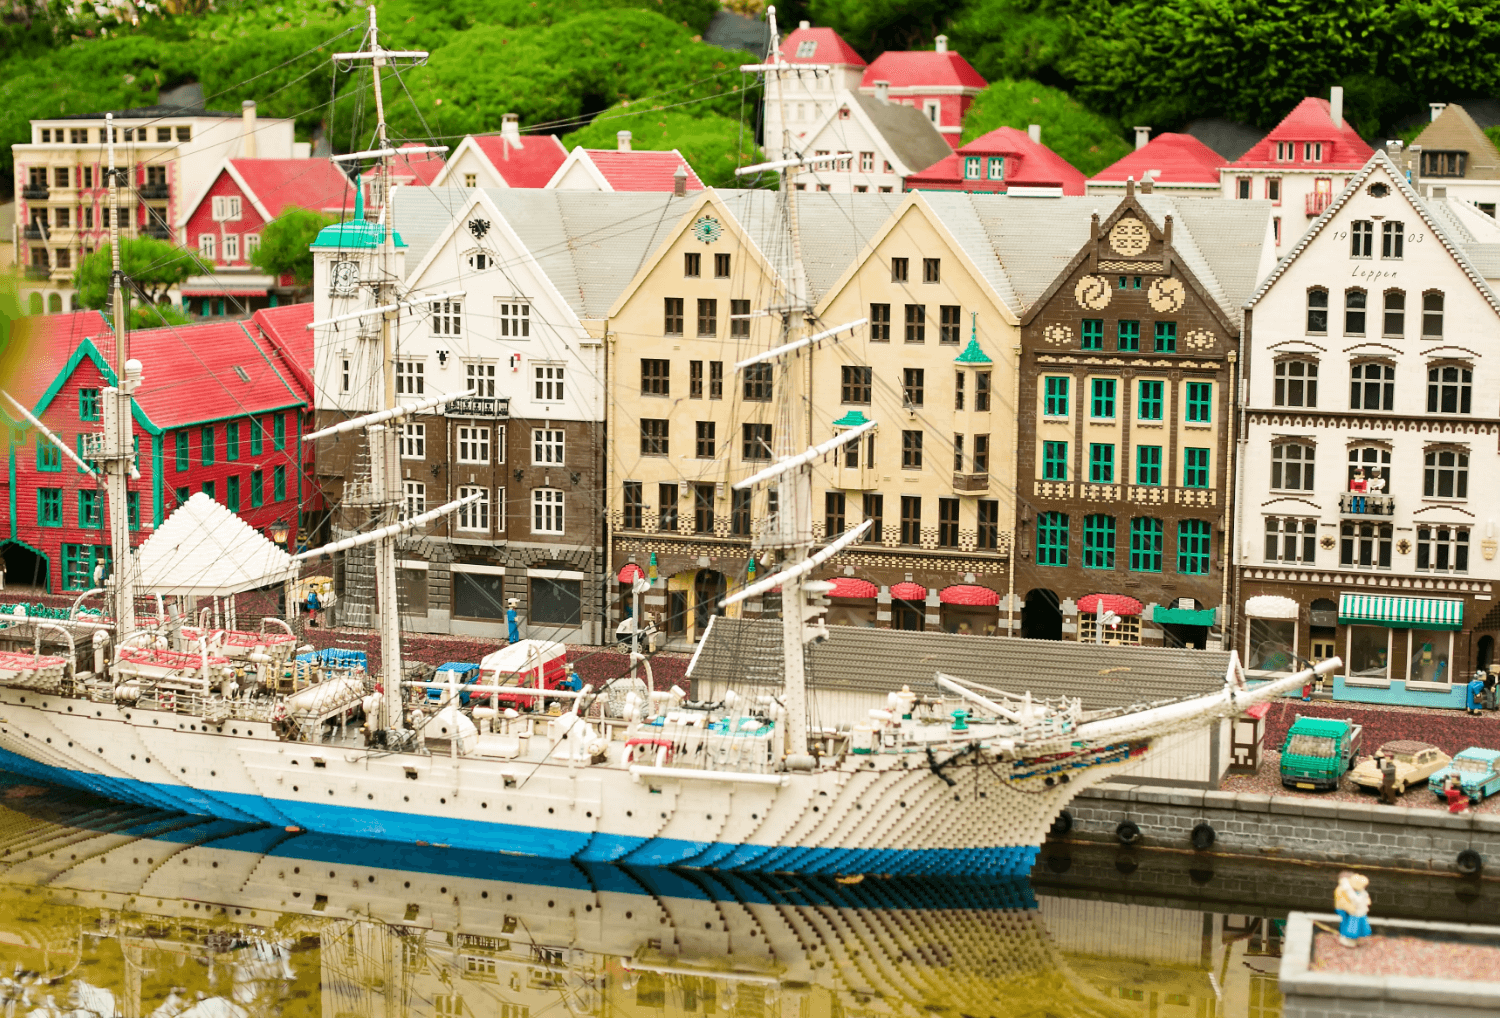 Legoland-Denemarken